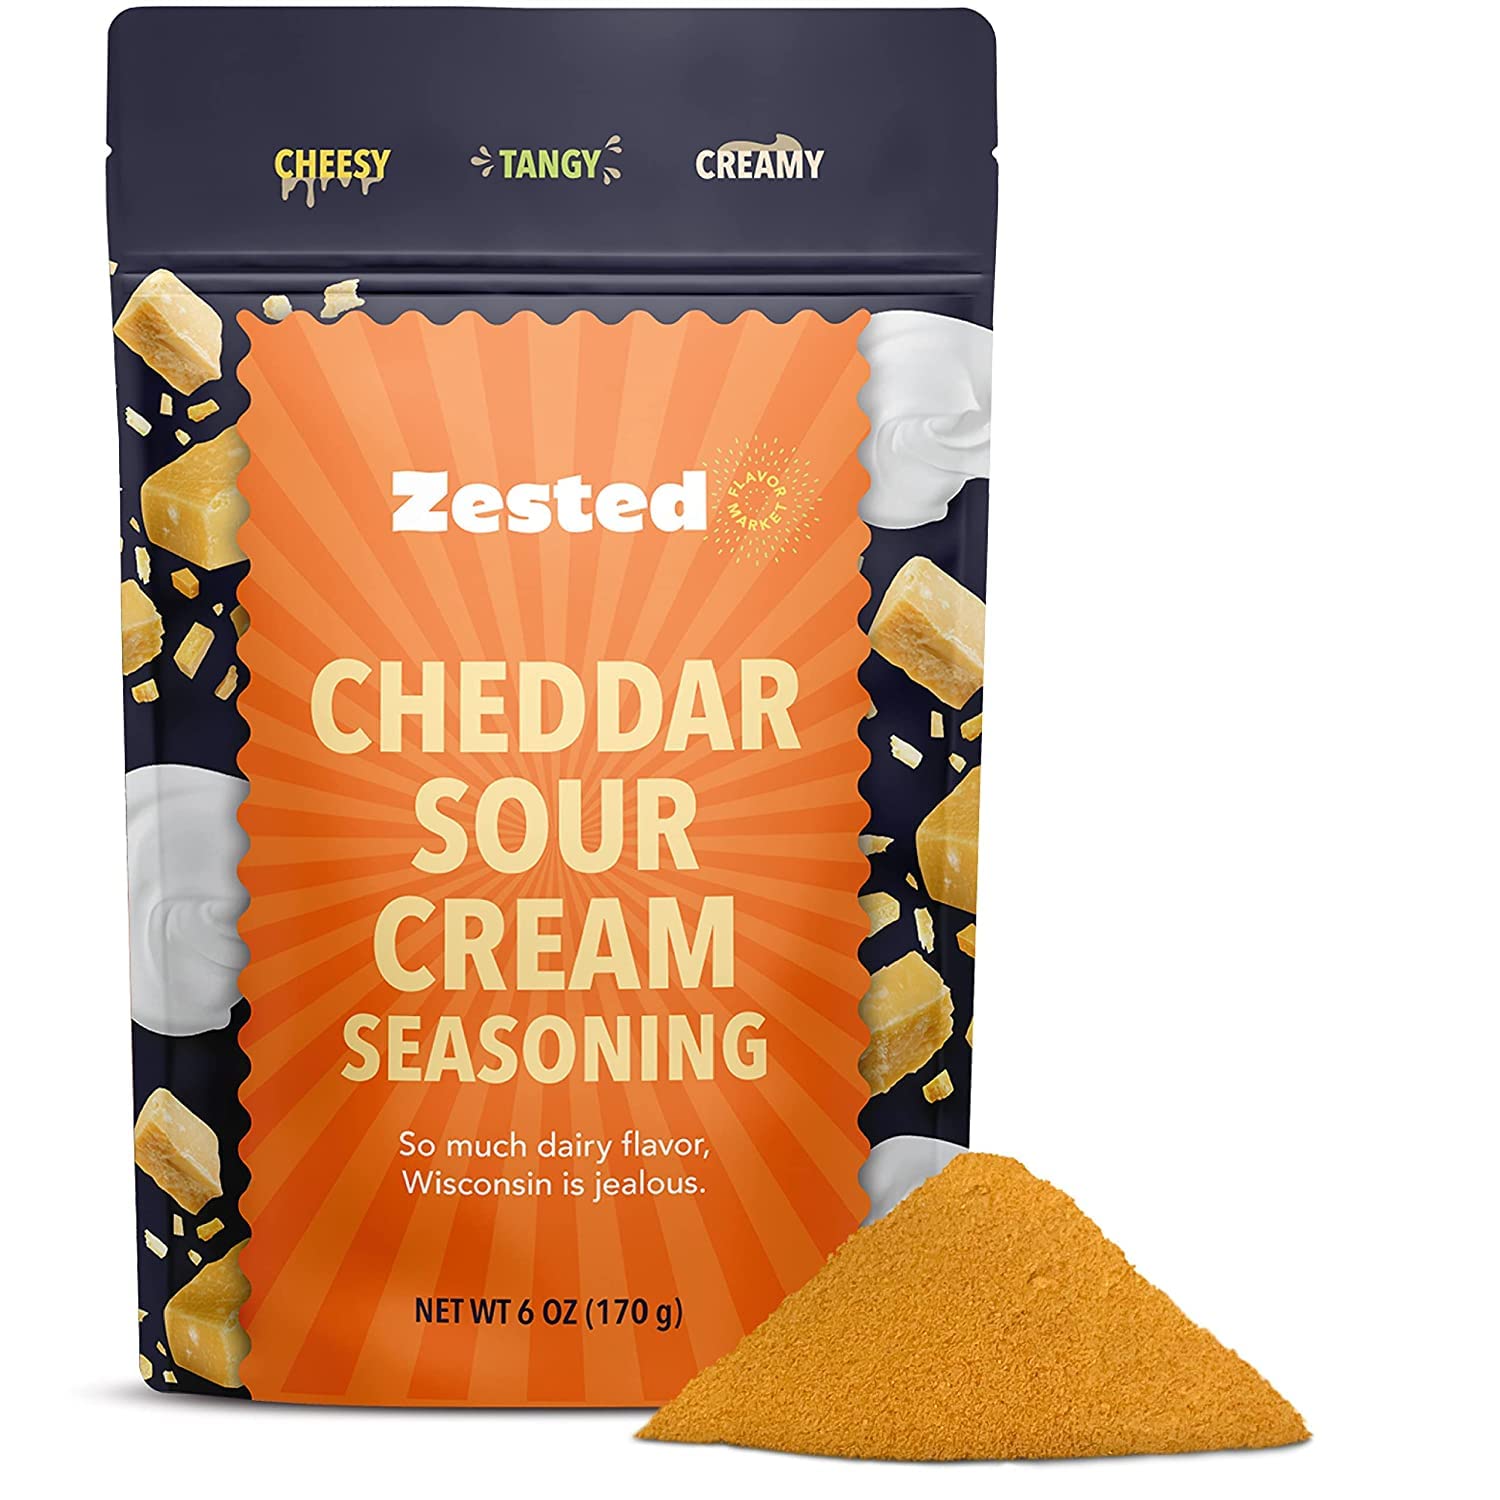 Zested Cheddar Sour Cream Seasoning